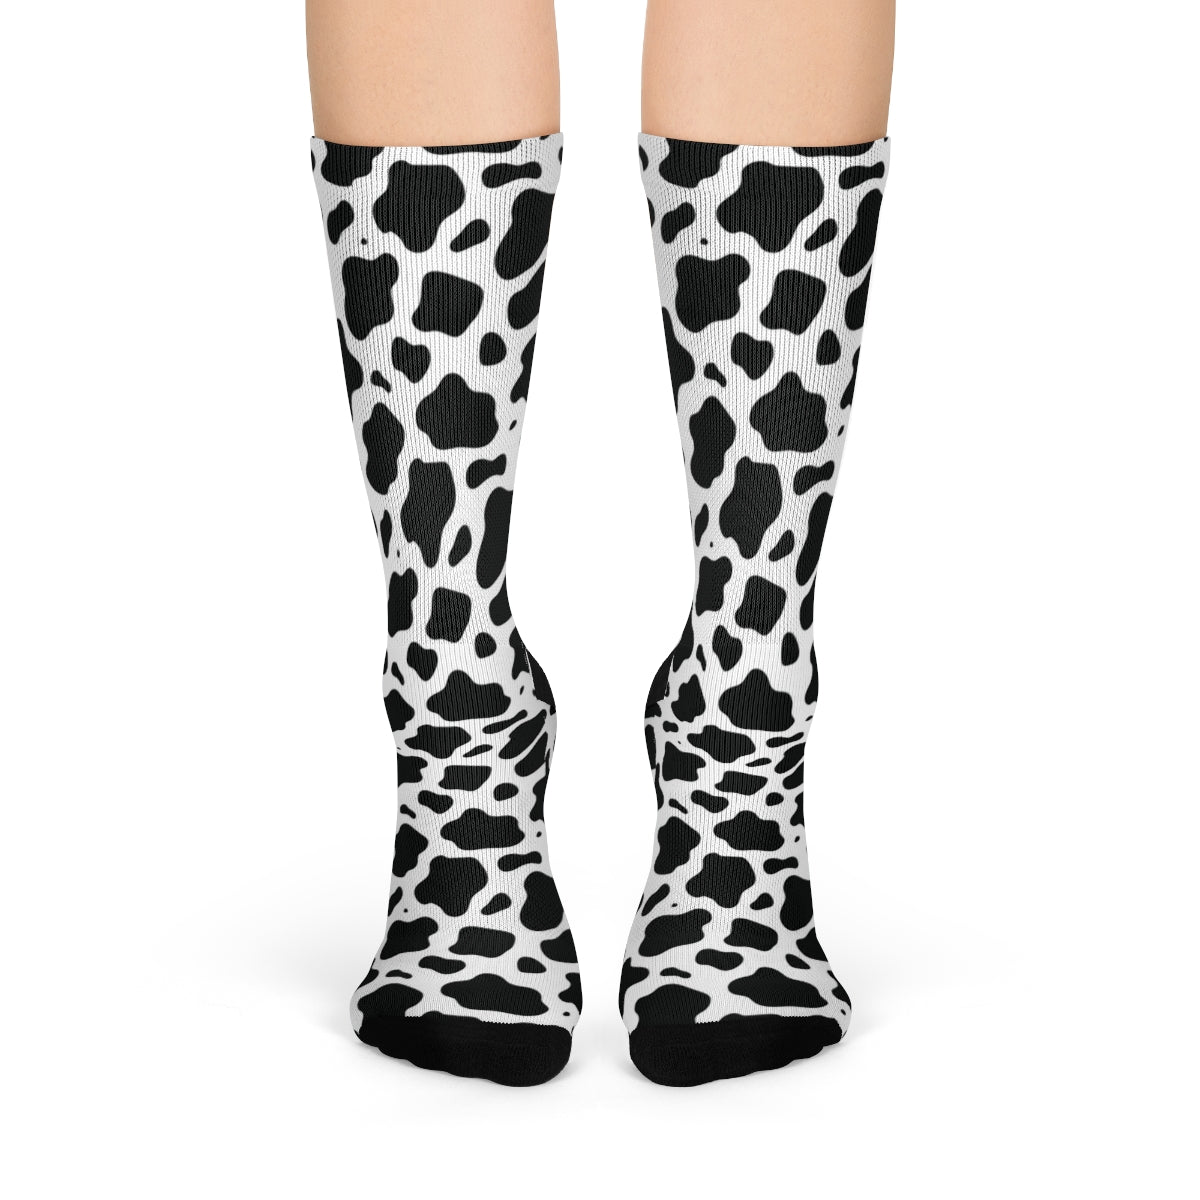 Cow Print Socks, Black White Crew 3D Sublimation Women Men Designer Fun Novelty Cool Funky Crazy Casual Unique Gift Starcove Fashion